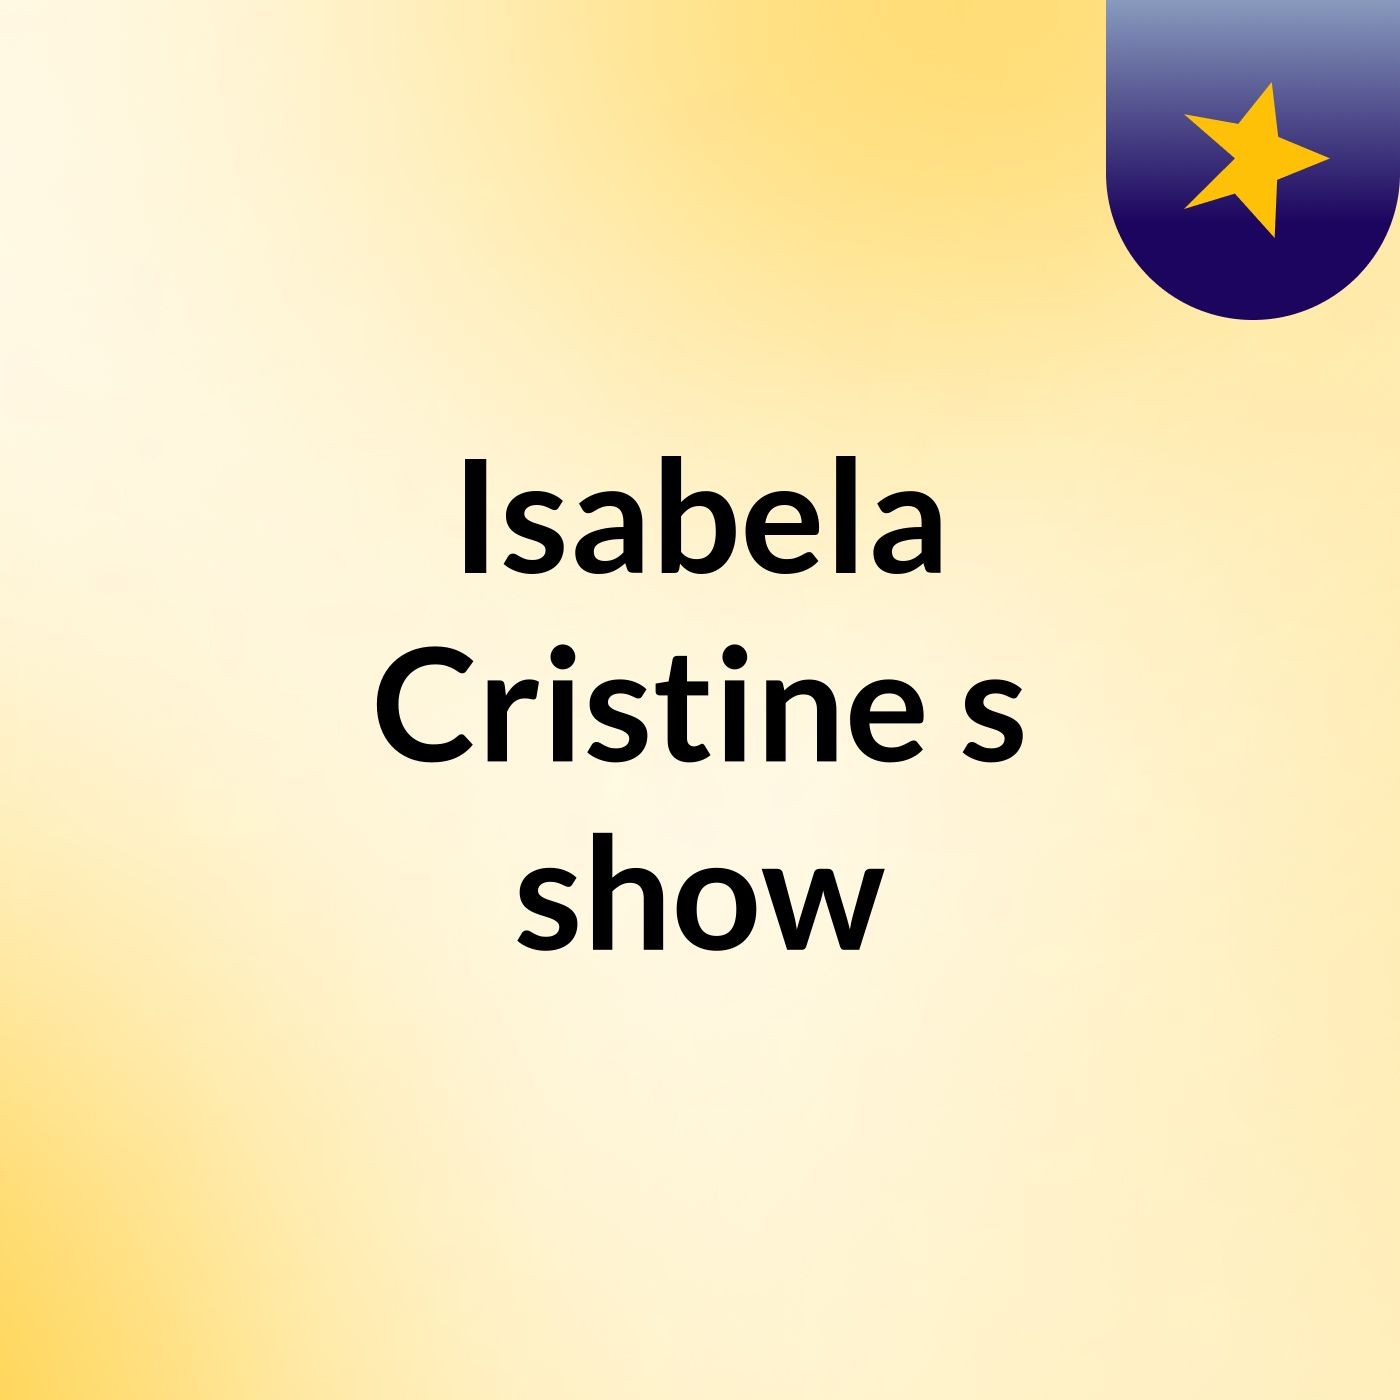 Isabela Cristine's show